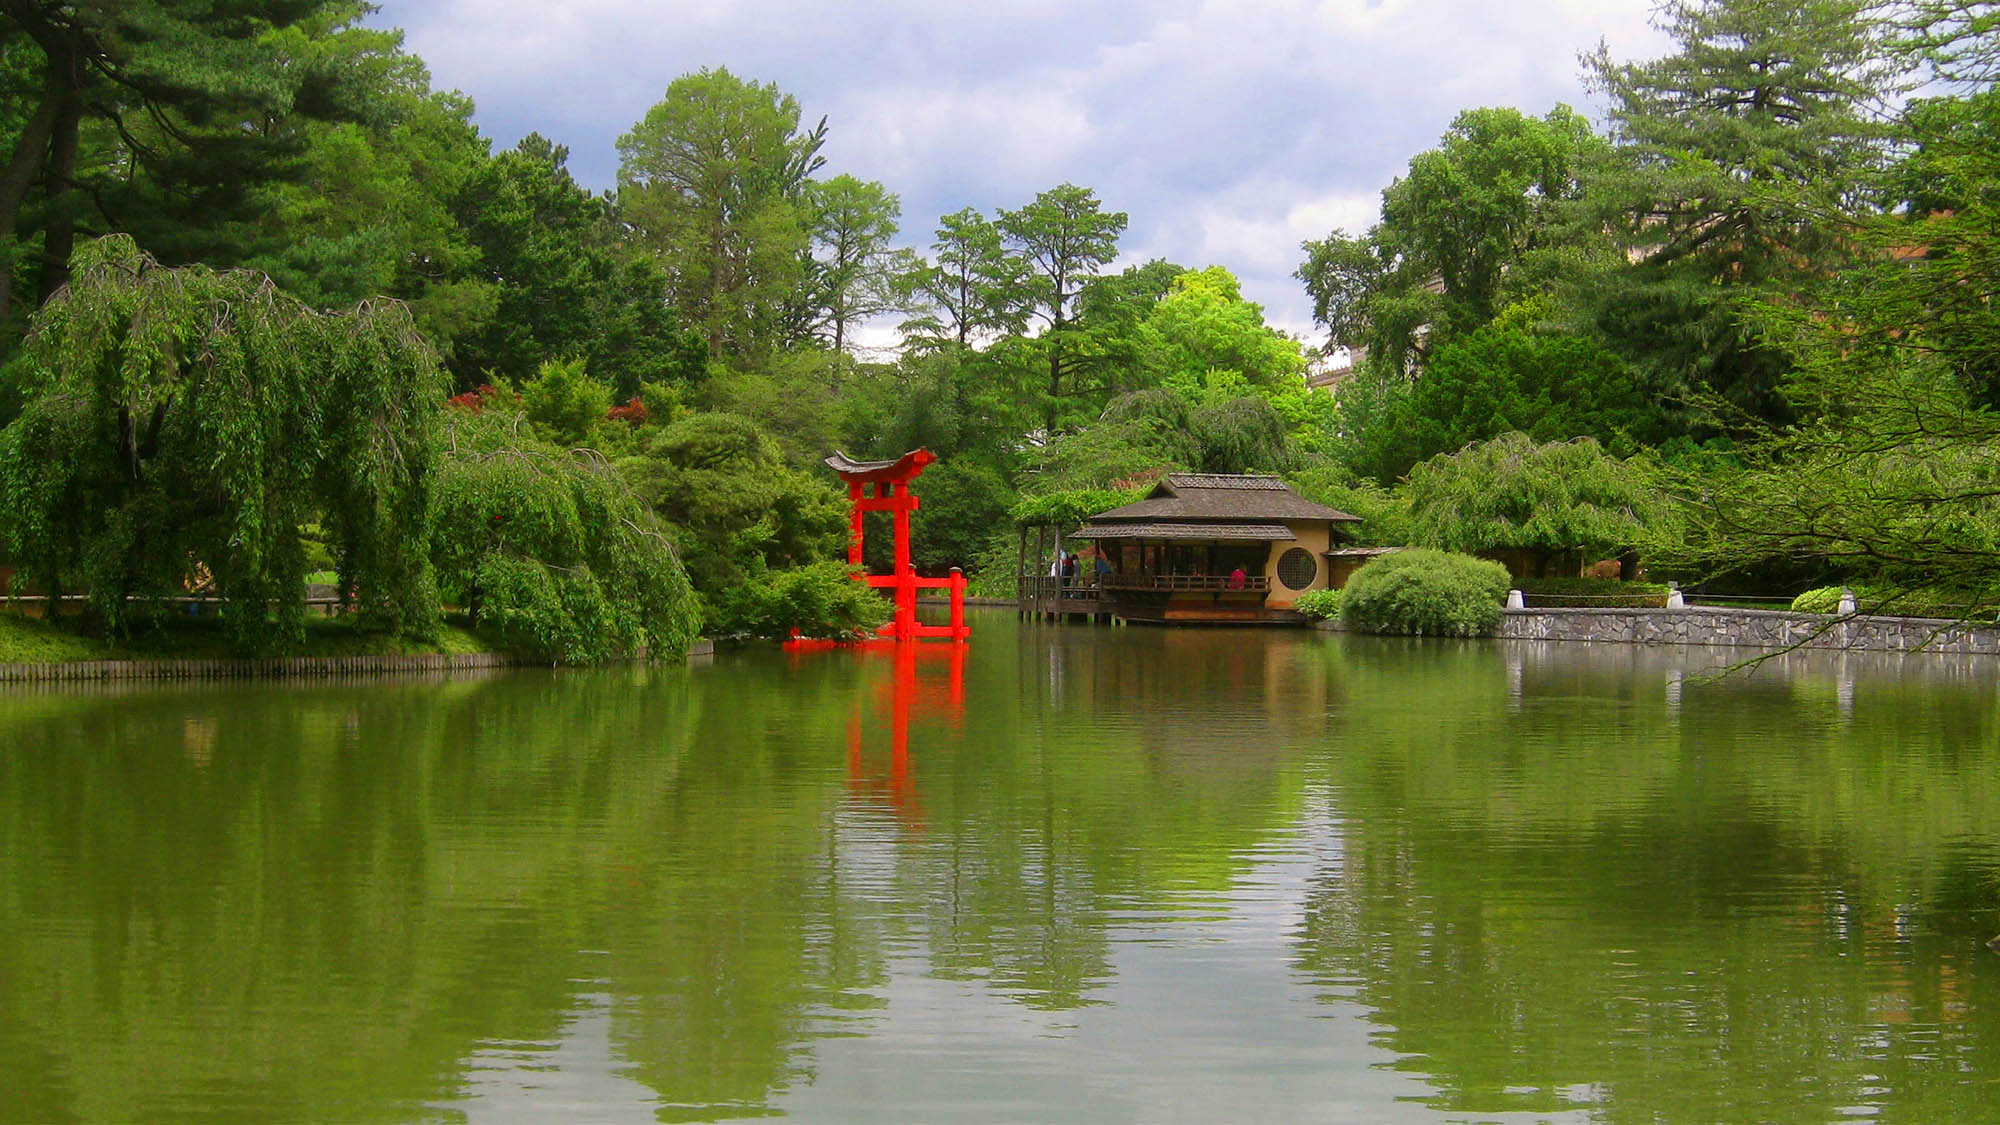 Japanese Garden at Brooklyn Botanic Garden with red pagoda